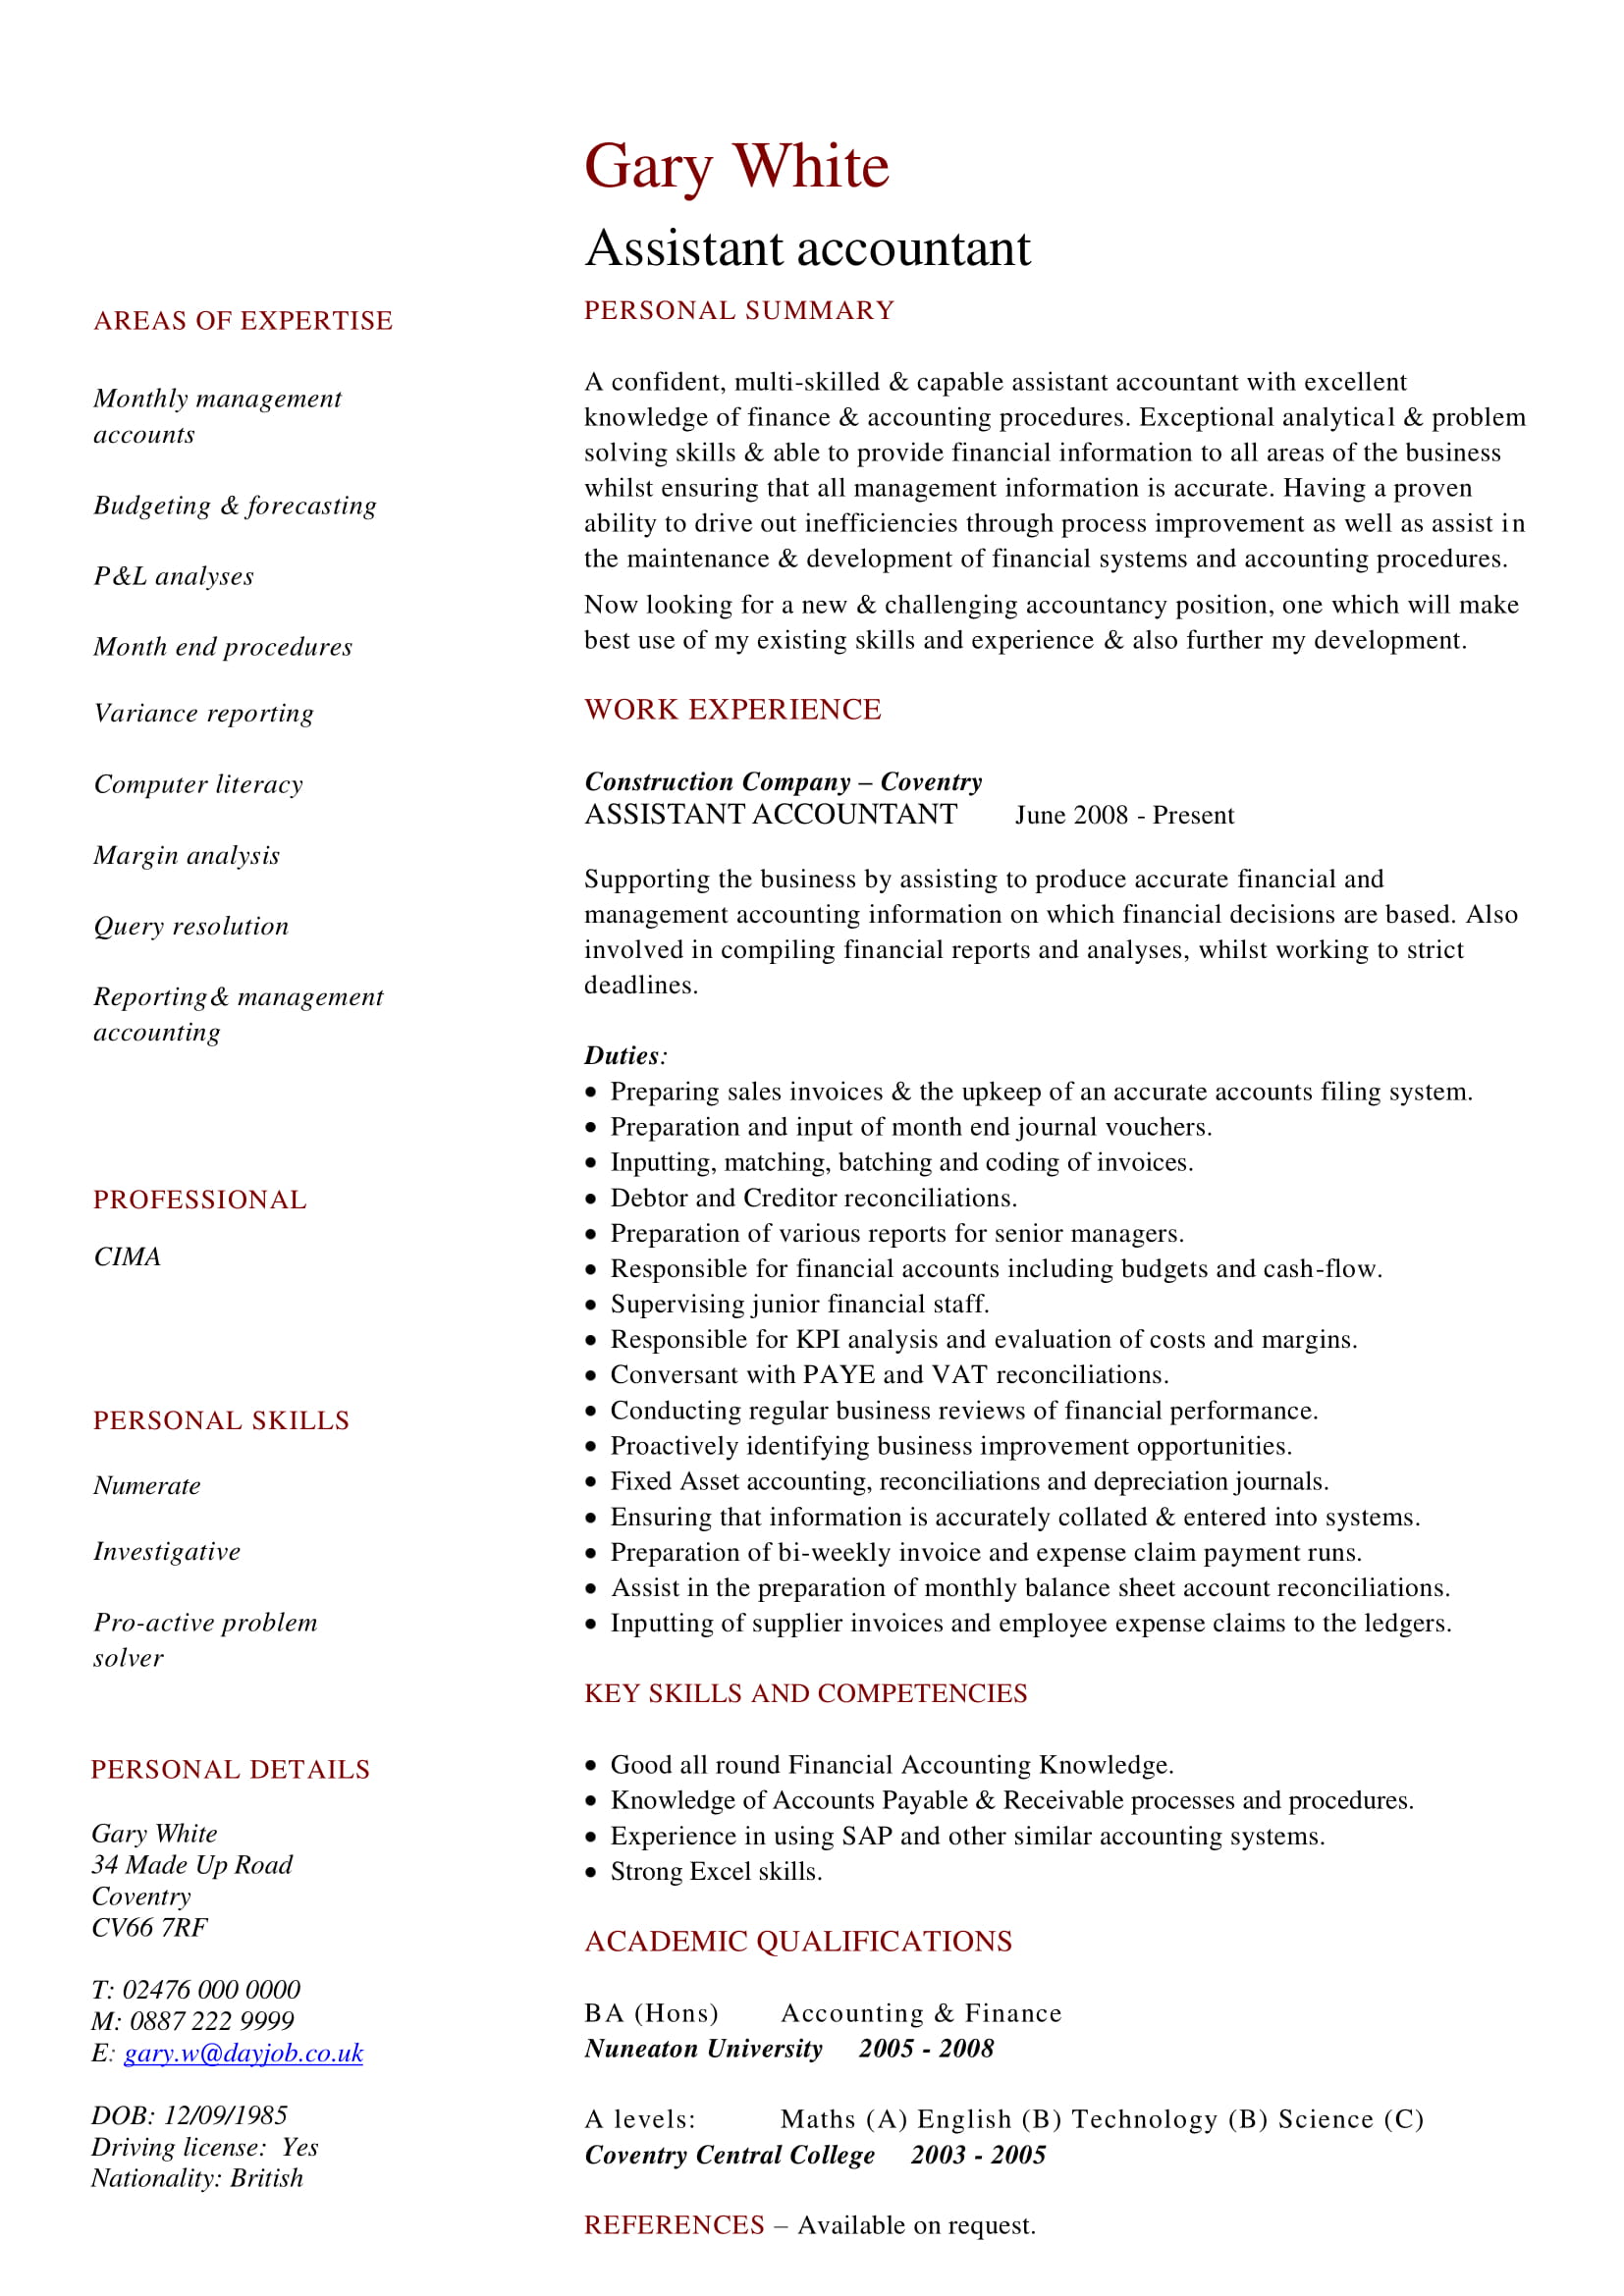 job summary on resume examples